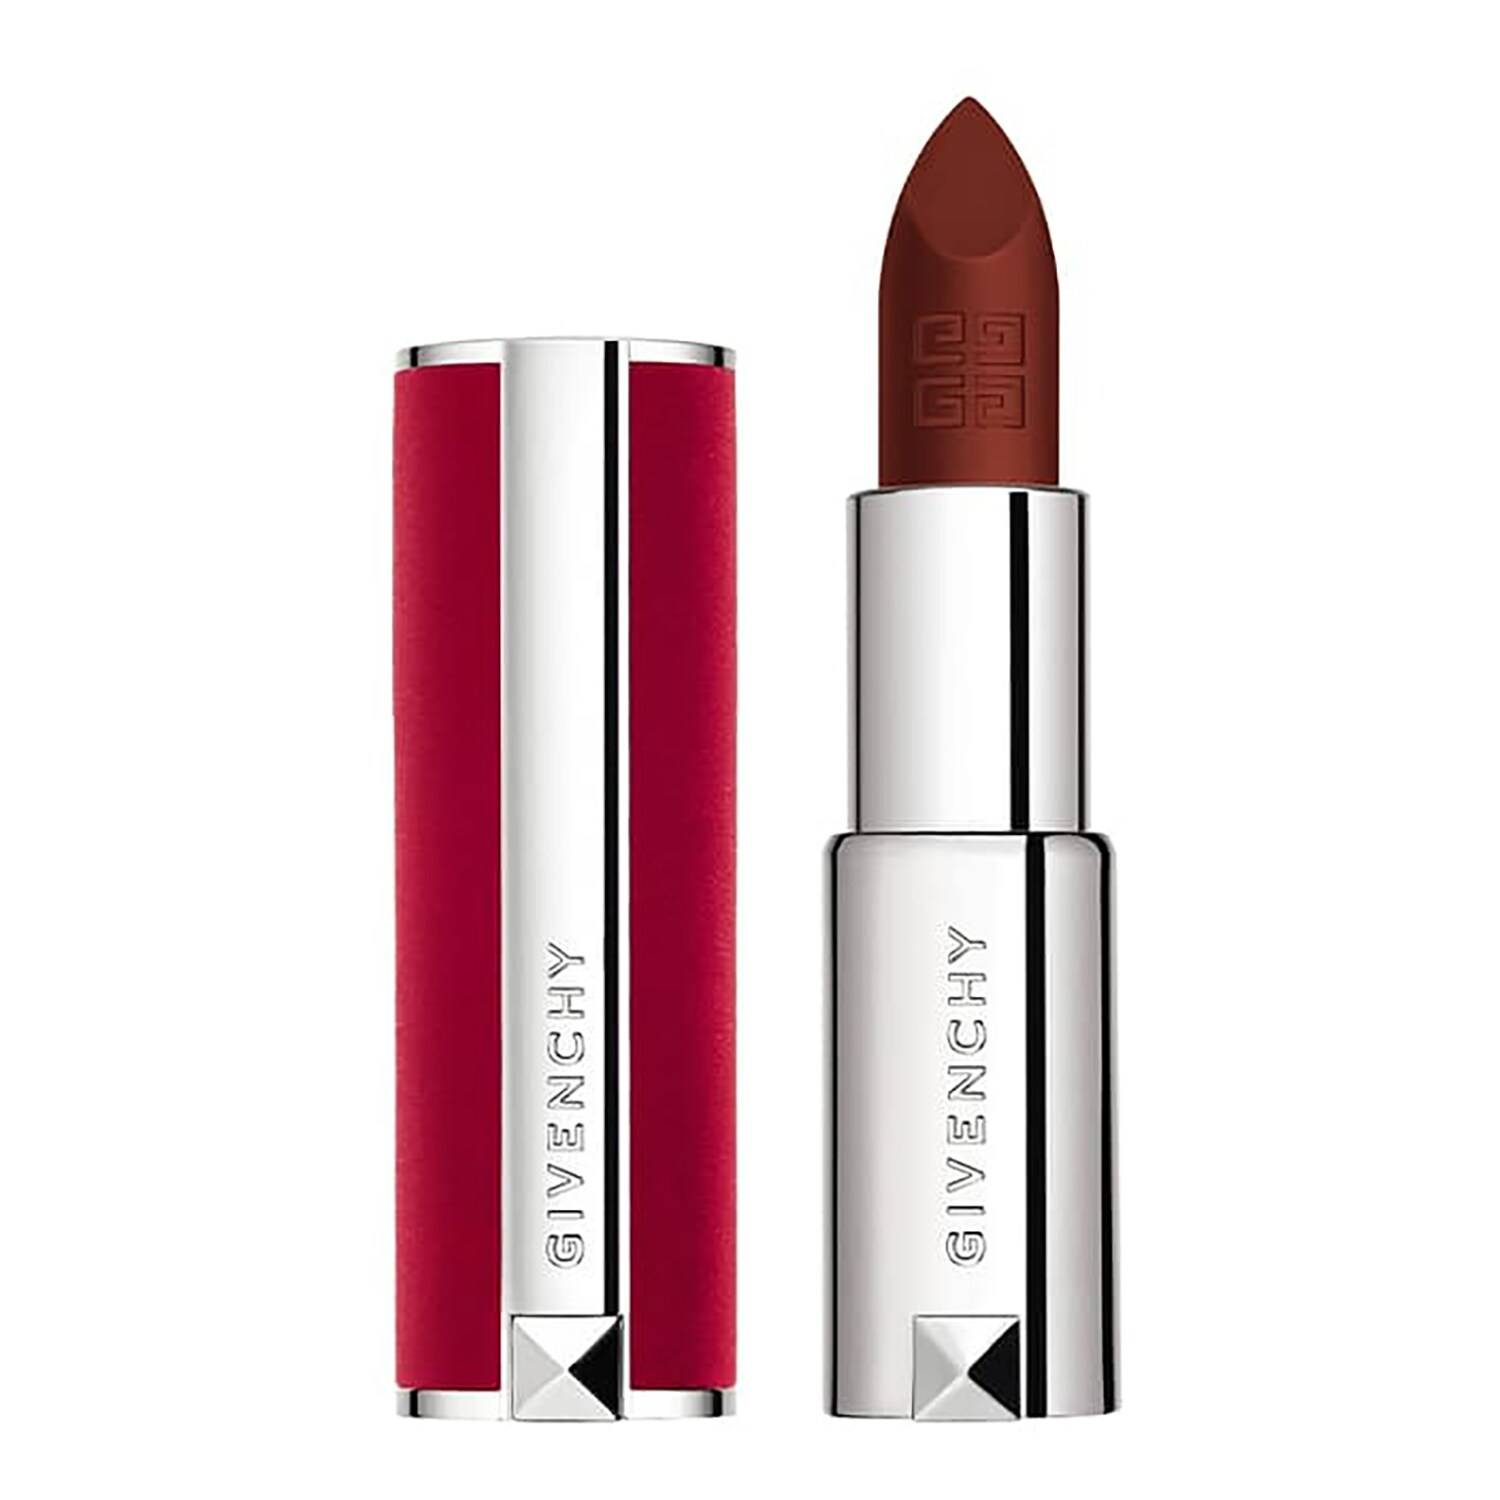 Givenchy Le Rouge Deep Velvet - Powdery Matte Finish Lipstick N50 - Brun Acajou